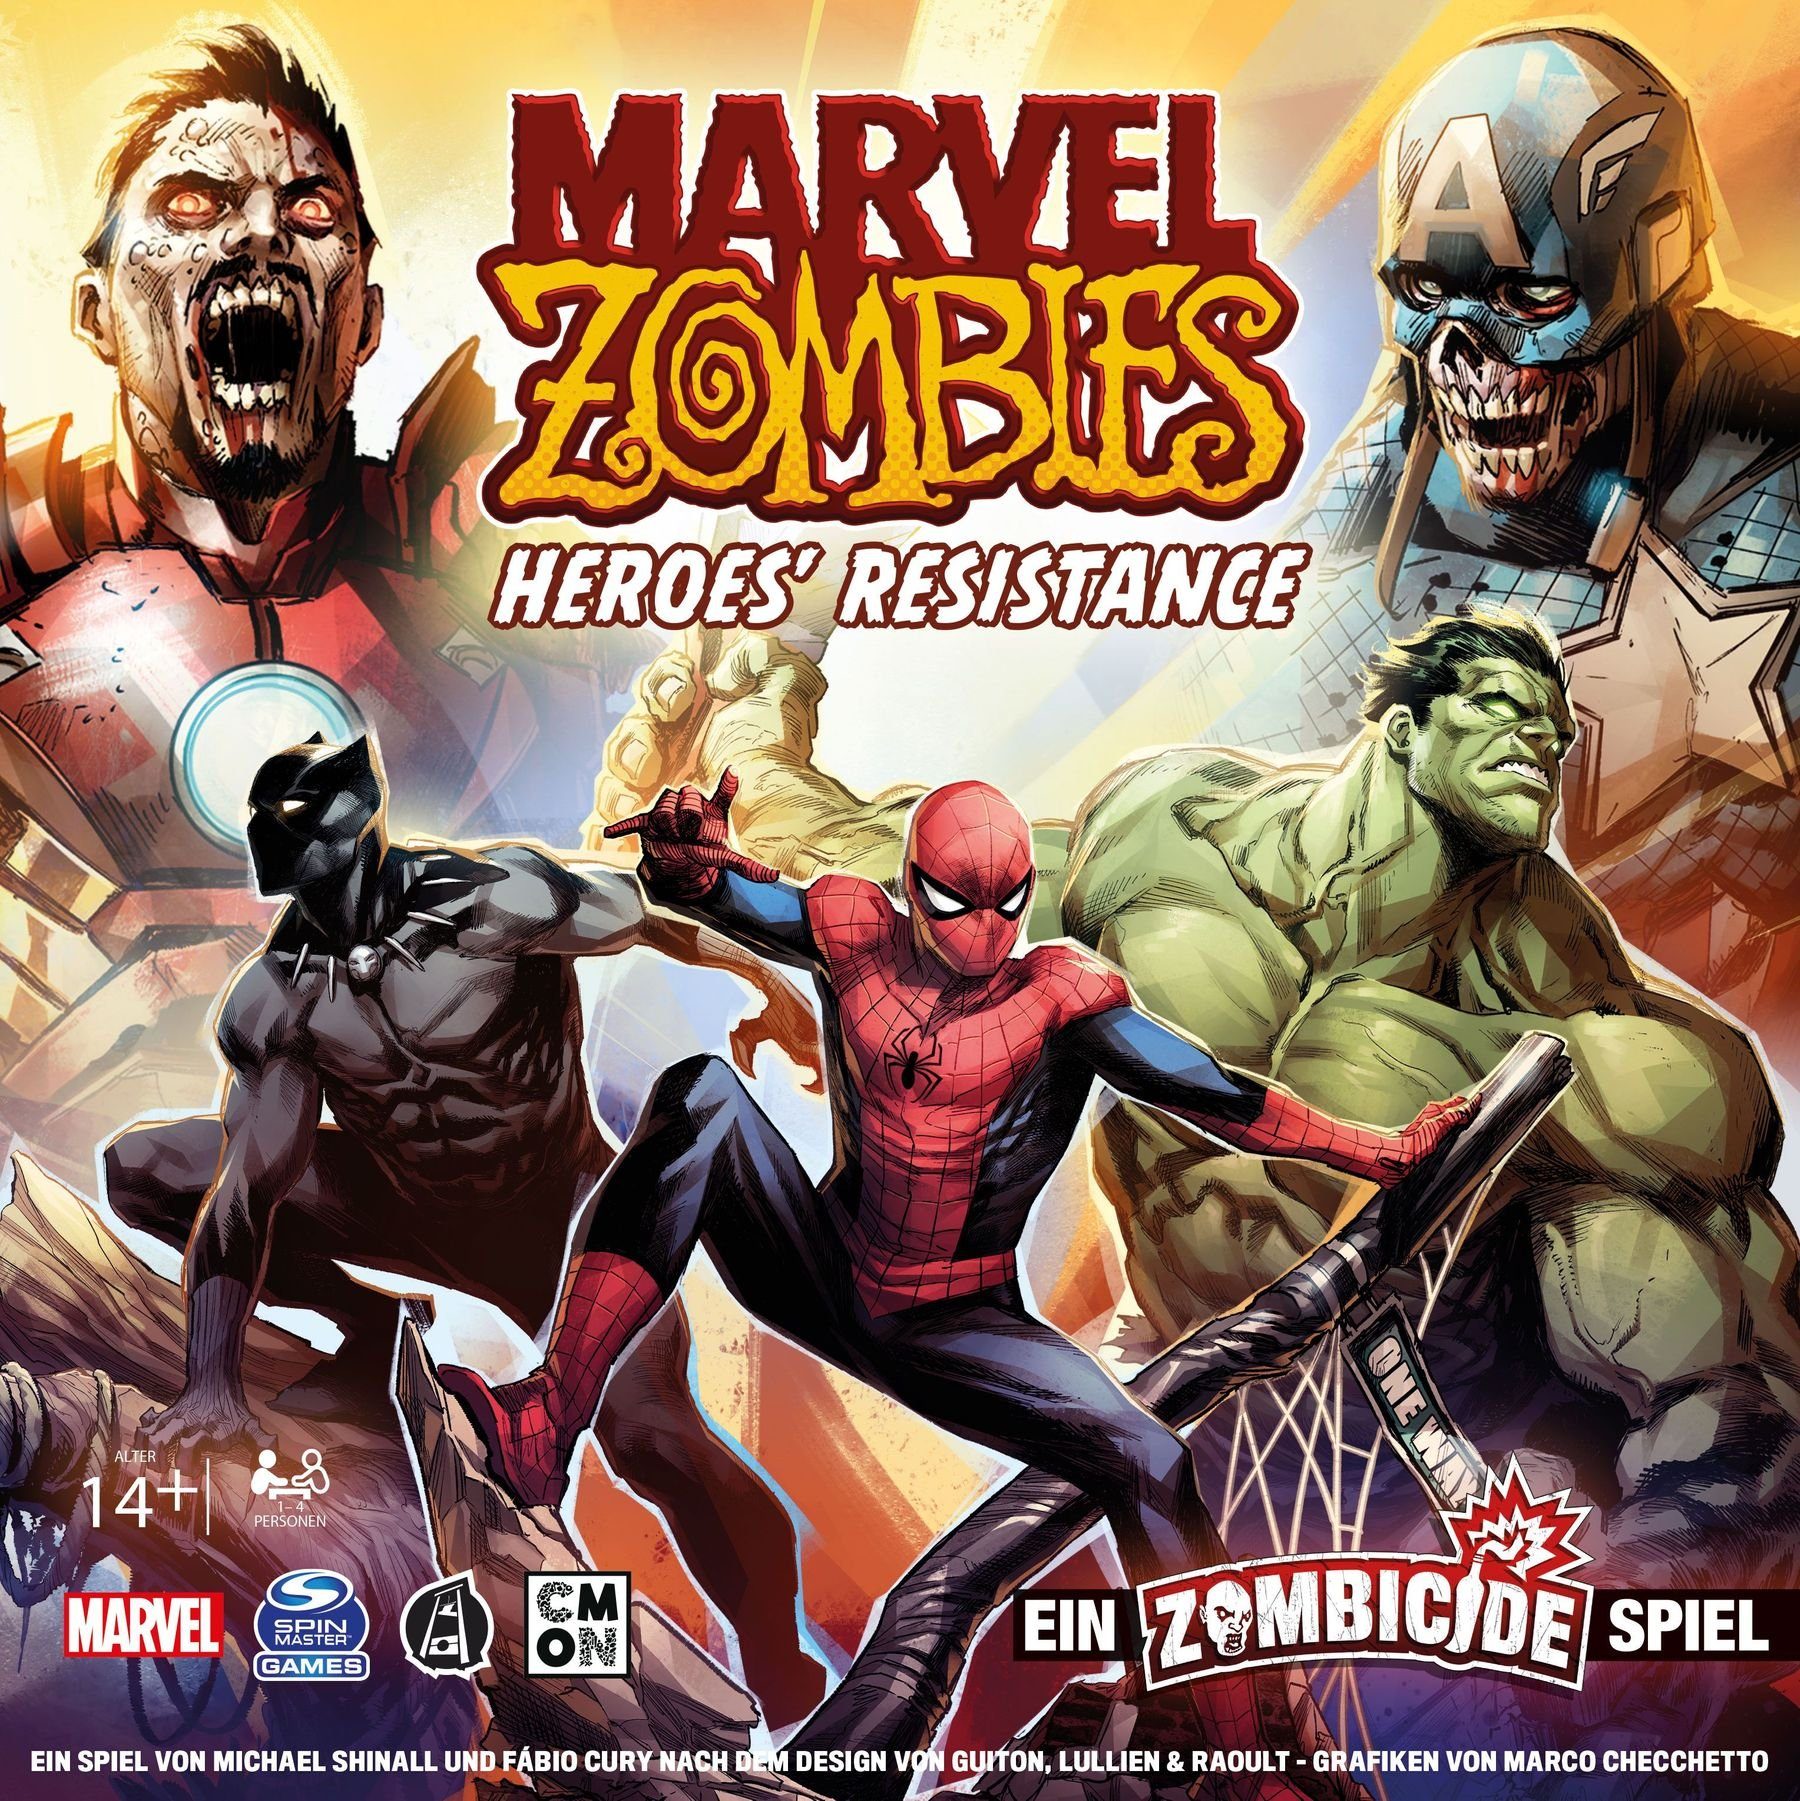 CoolMiniOrNot Spiel, CMON - Marvel Zombies: Heroes‘ Resistance - Ein Zombicide-Spiel CMON - Marvel Zombies: Heroes‘ Resistance - Ein Zombicide-Spiel | Spiele